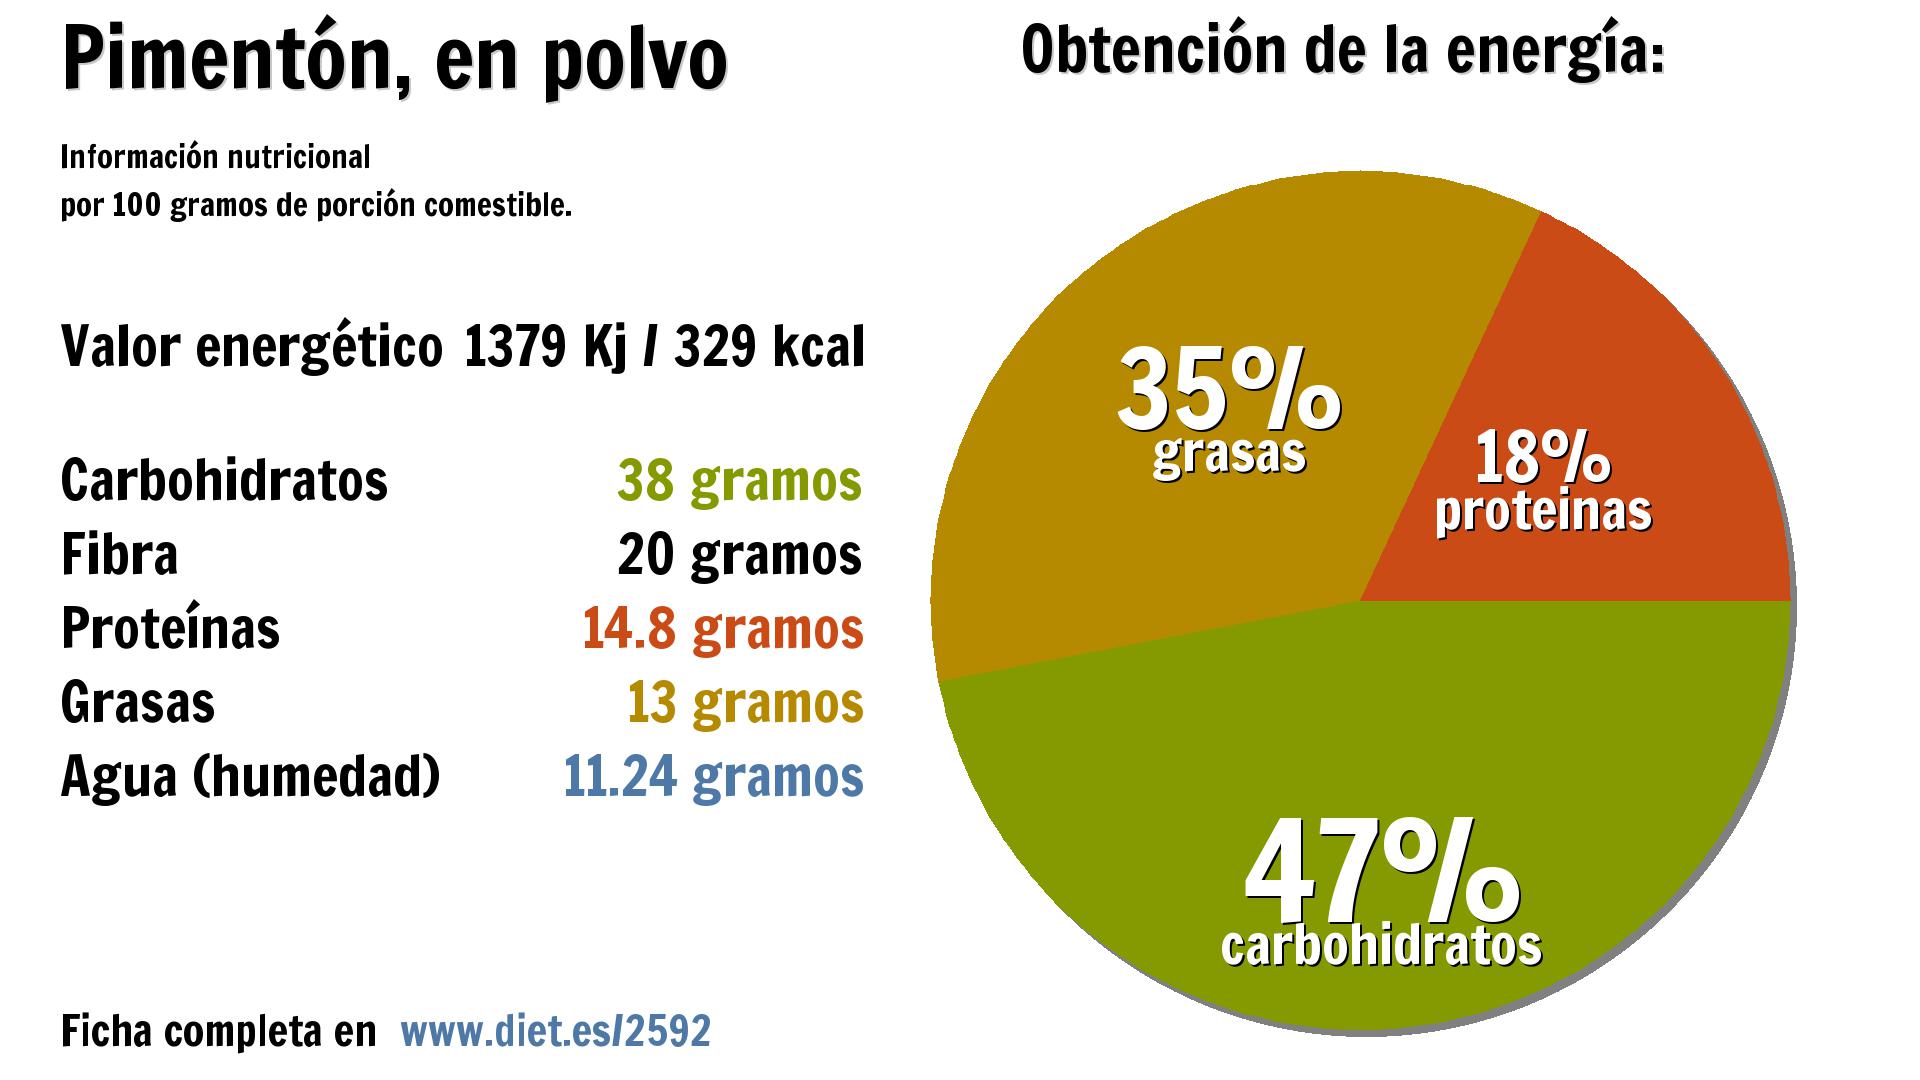 Pimentón, en polvo: energía 1379 Kj, carbohidratos 38 g., fibra 20 g., proteínas 15 g., grasas 13 g. y agua 11 g.